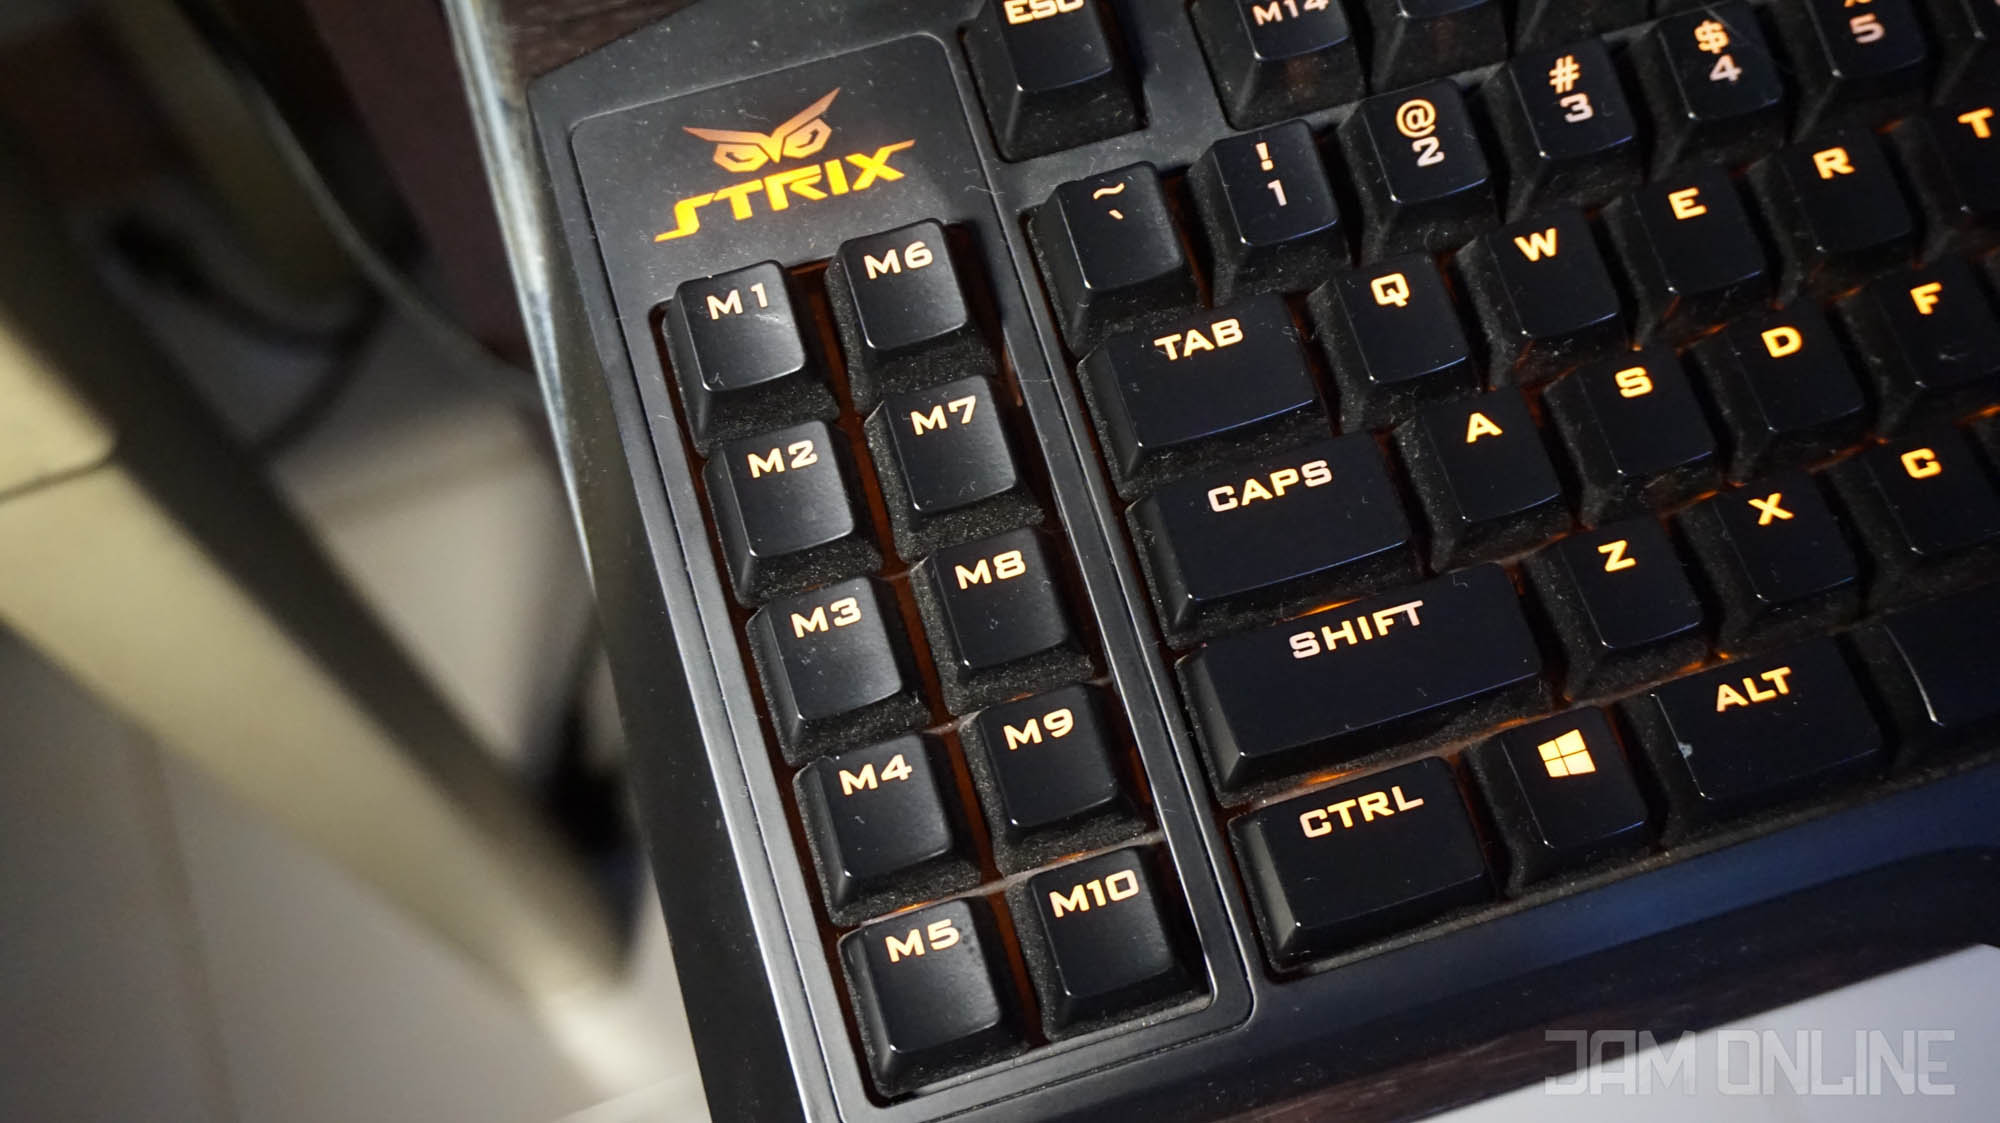 strix keyboard autoclicker